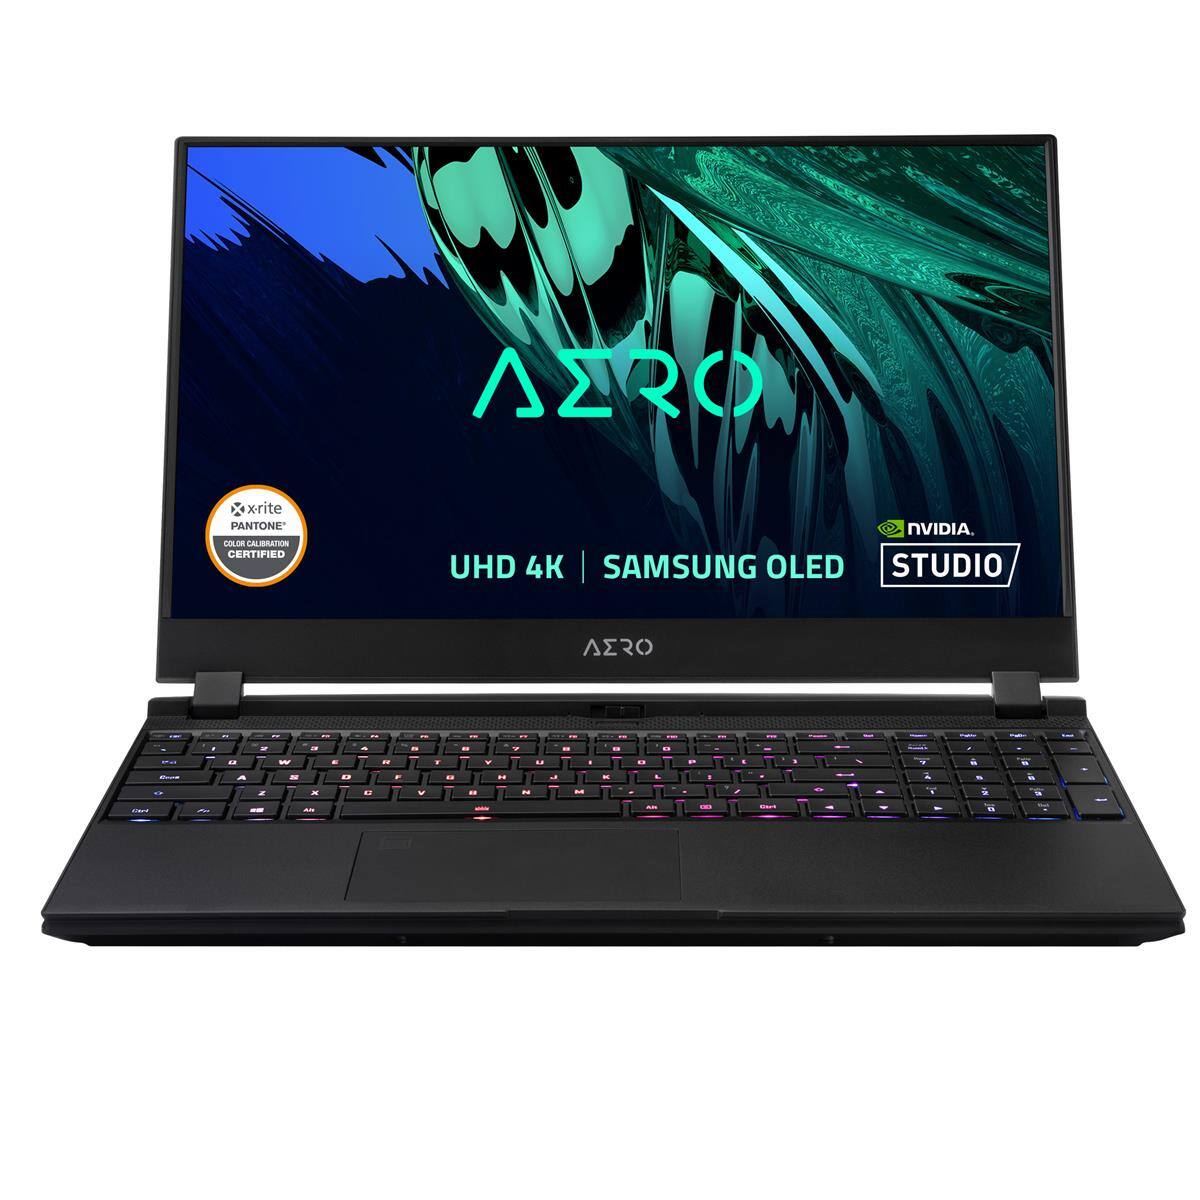 Gigabyte AERO 15 Laptop: 15.6" 4K OLED, RTX 3080 8GB, i7-11800H, 16GB, 1TB SSD, $2019 after $200 MIR + Free S/H at Adorama